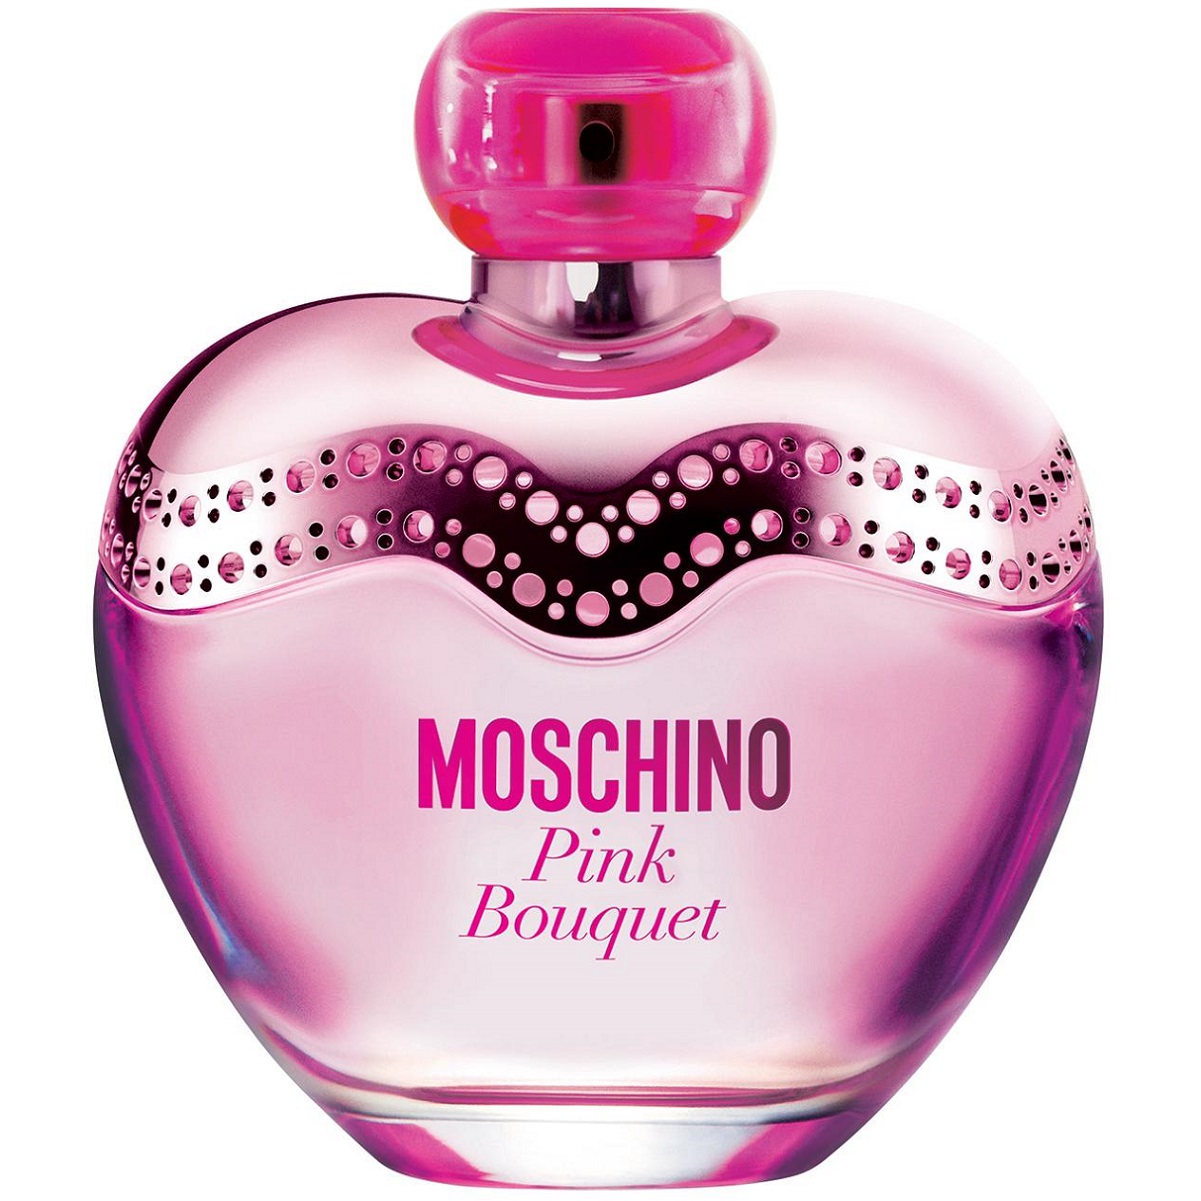 Moschino парфюмерная вода цена. Moschino Pink Bouquet 50ml. Духи Москино туалетная вода. Духи Москино Pink Bouquet. Духи Москино 50 мл.